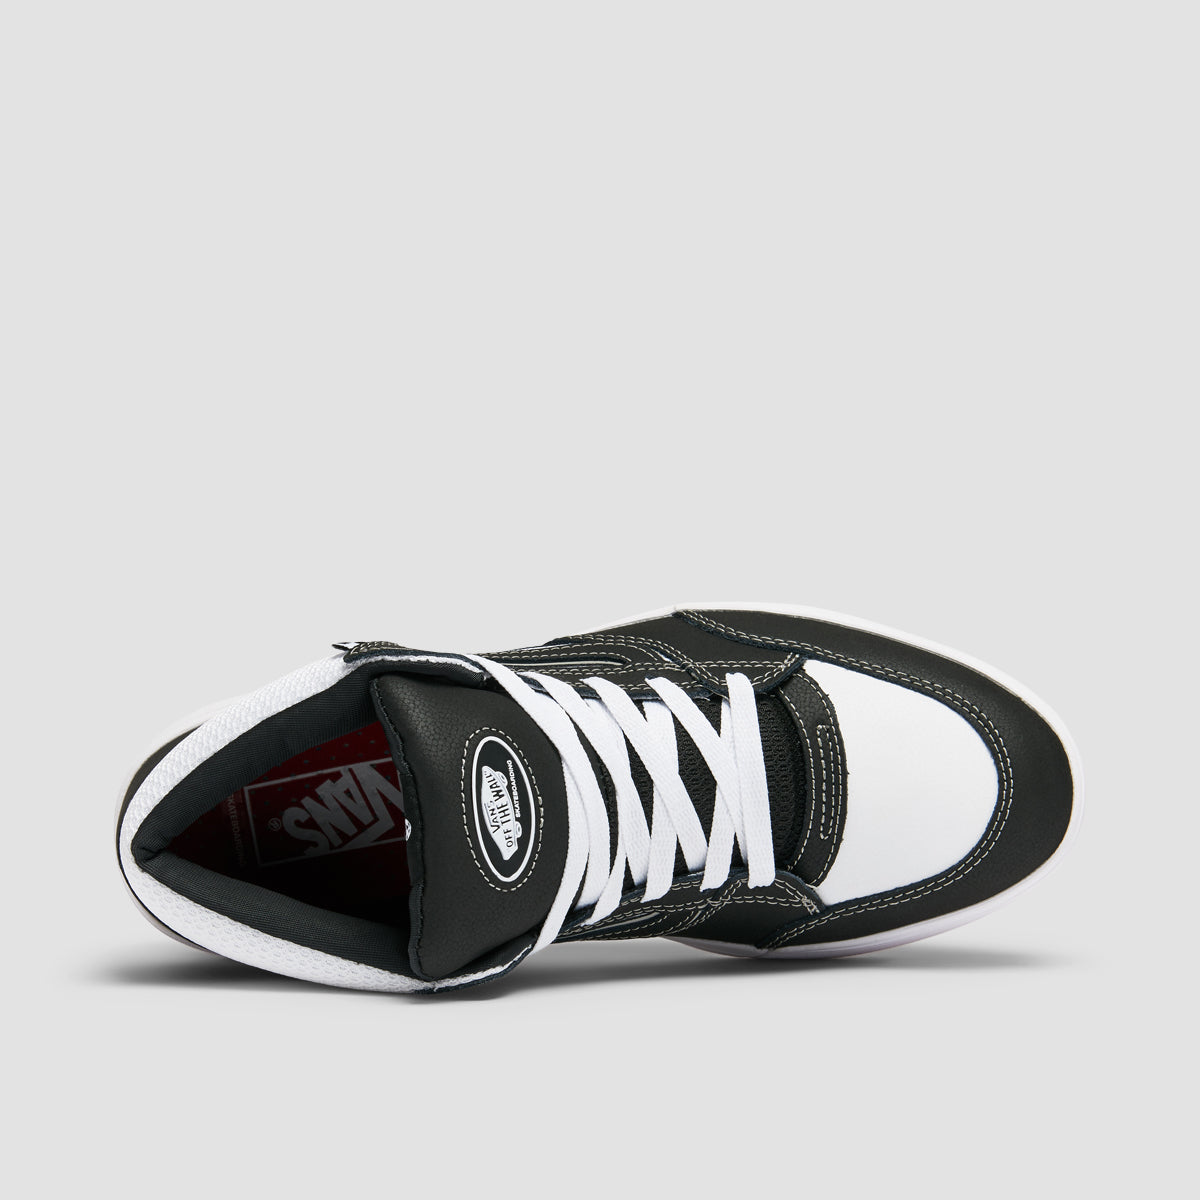 Vans Skate Zahba Mid Top Shoes Black/White/Red